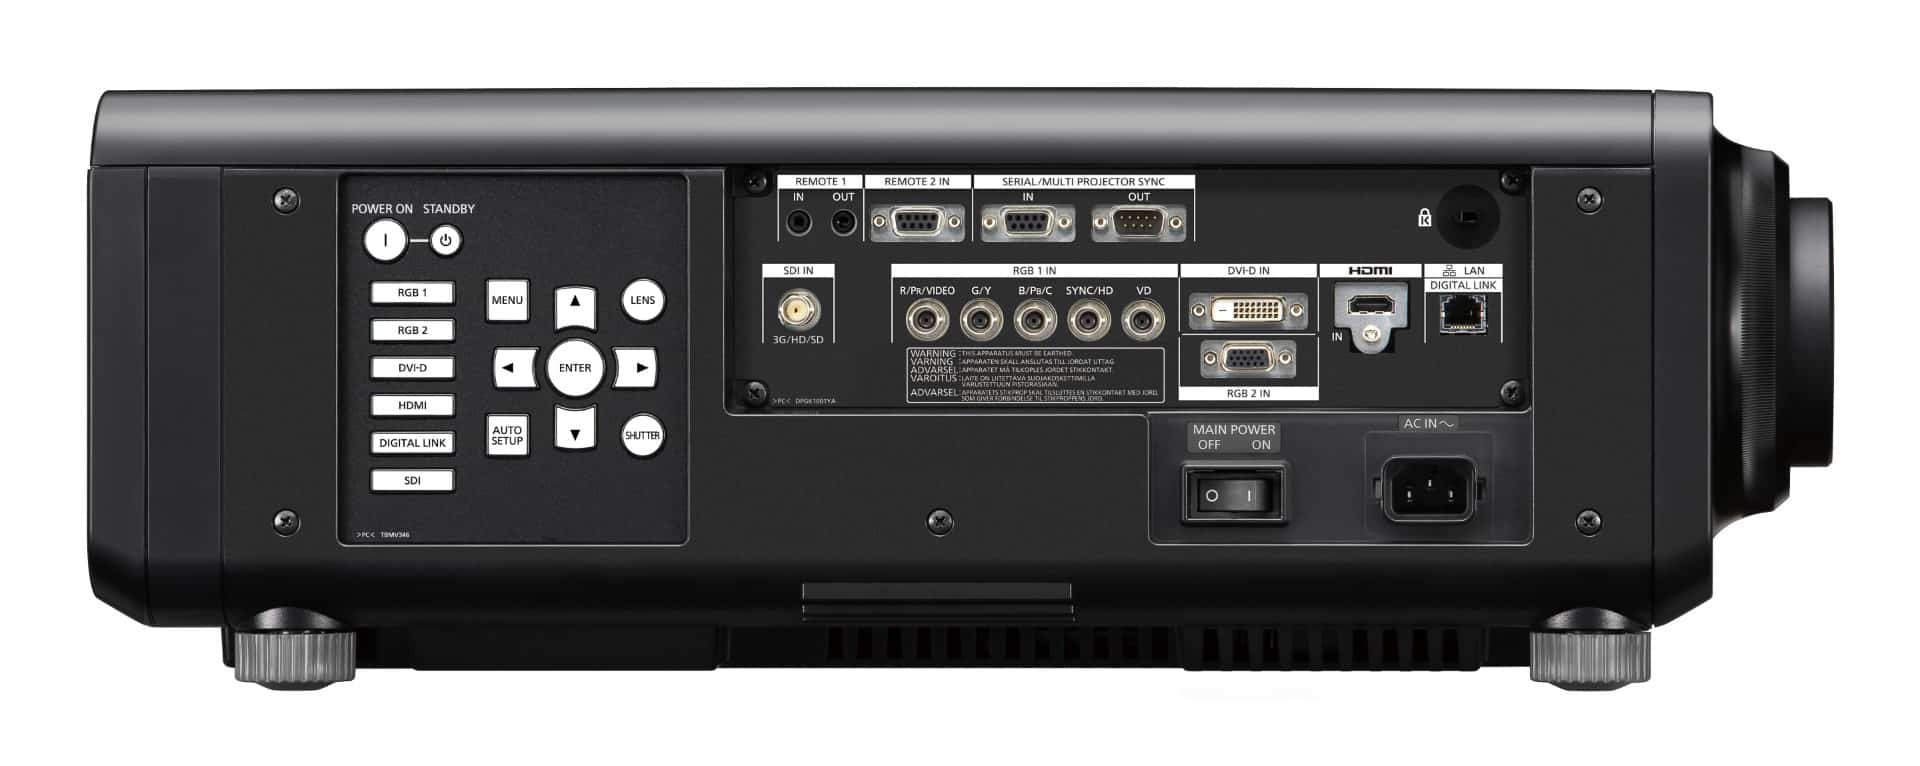 مشخصات ویدئو پروژکتور لیزری پاناسونیک مدل PT-RZ870